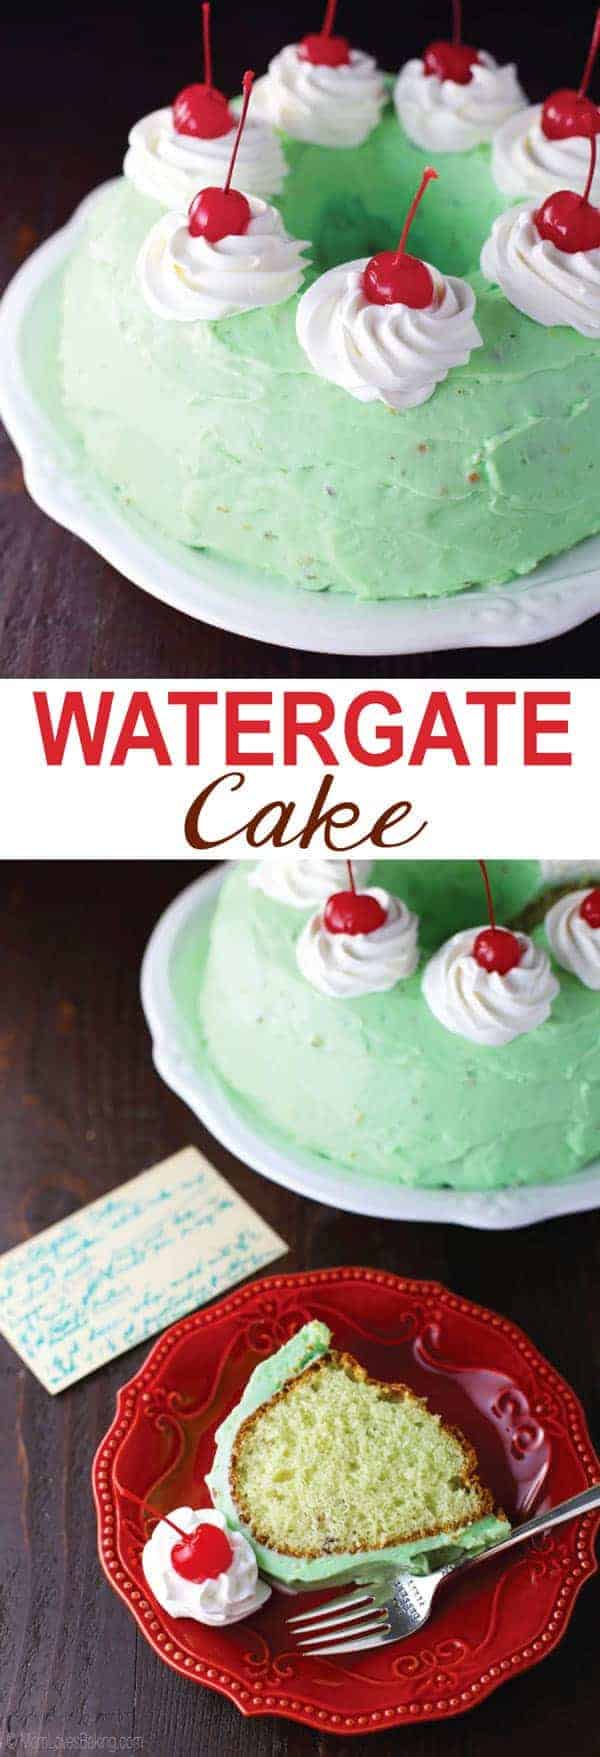 Watergate Cake